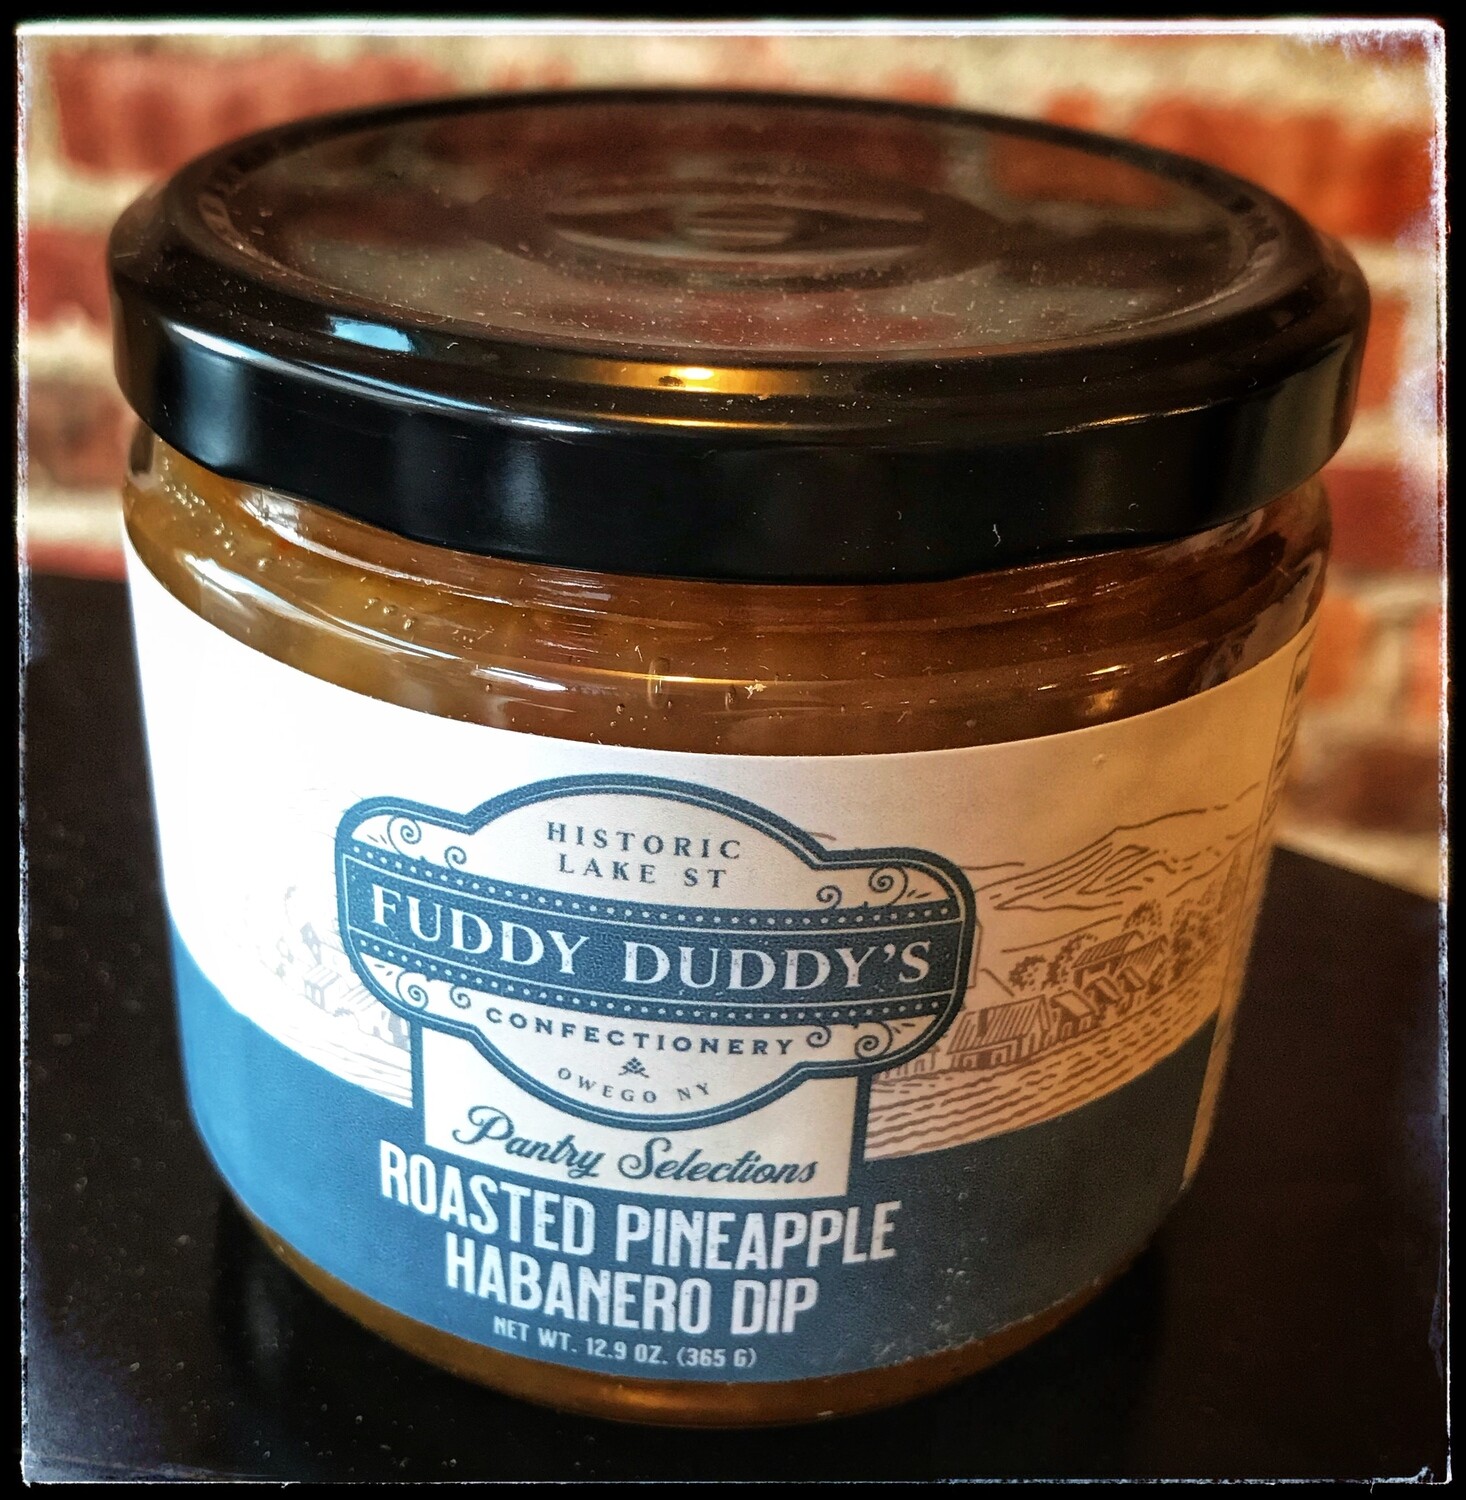 Fuddy Duddy's Roasted Pineapple Habanero Dip